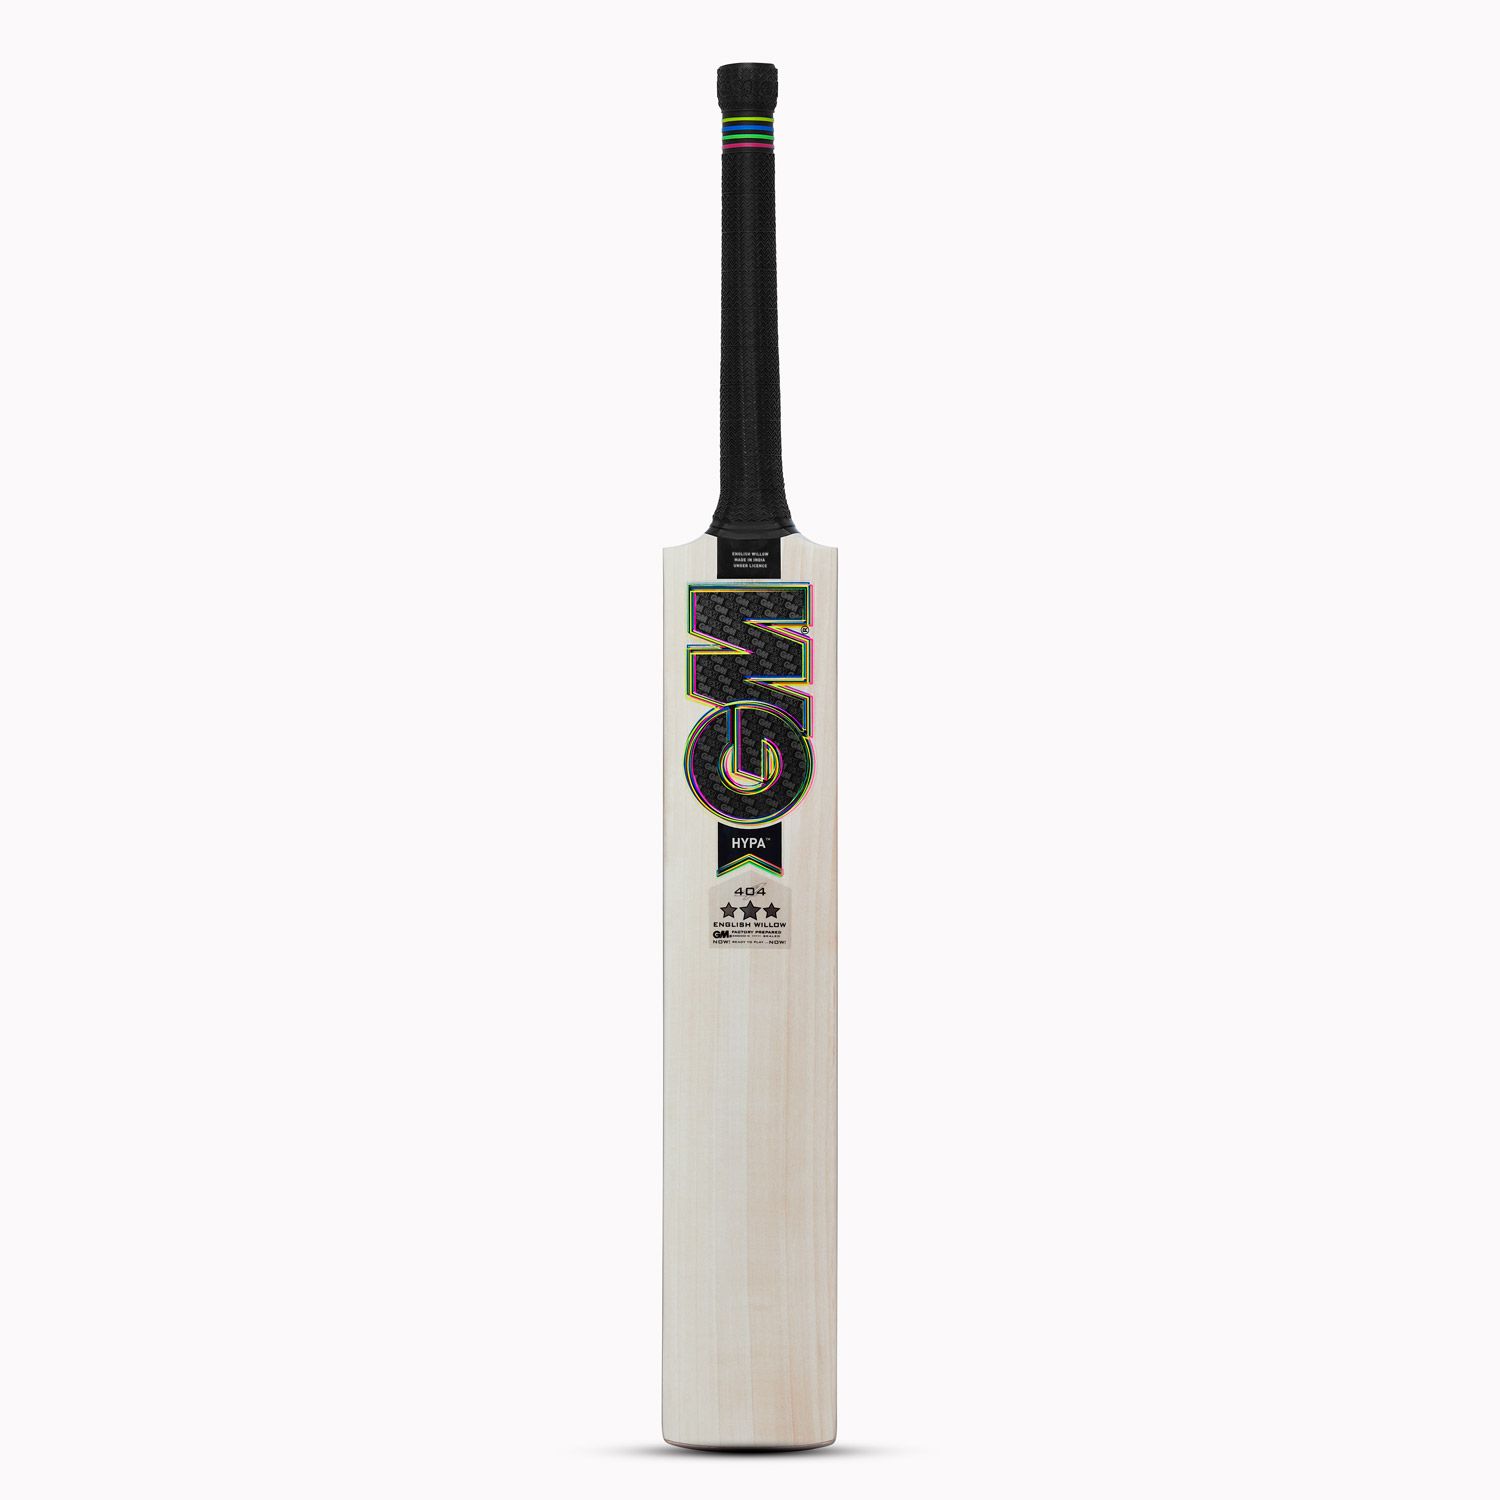 Hypa 404 English Willow Cricket Bat